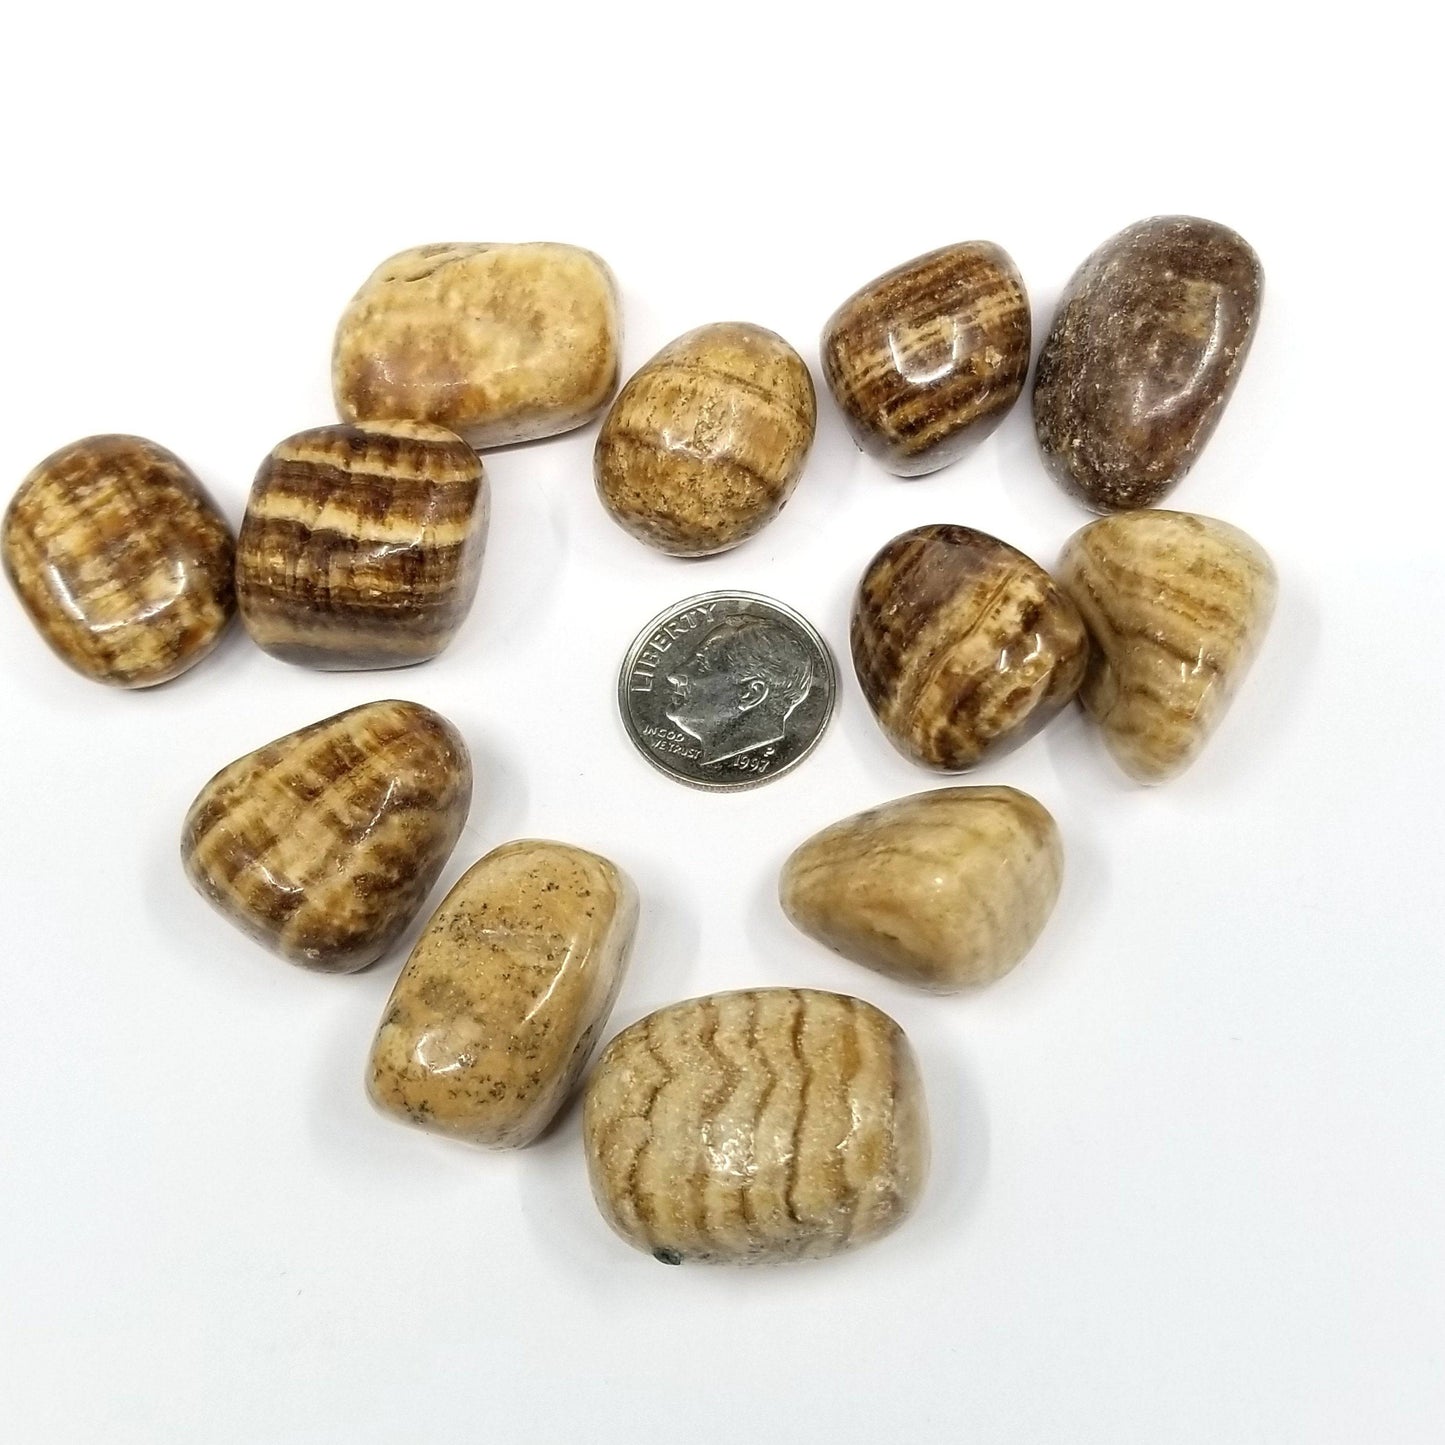 Aragonite Tumbled Stones 1 LB